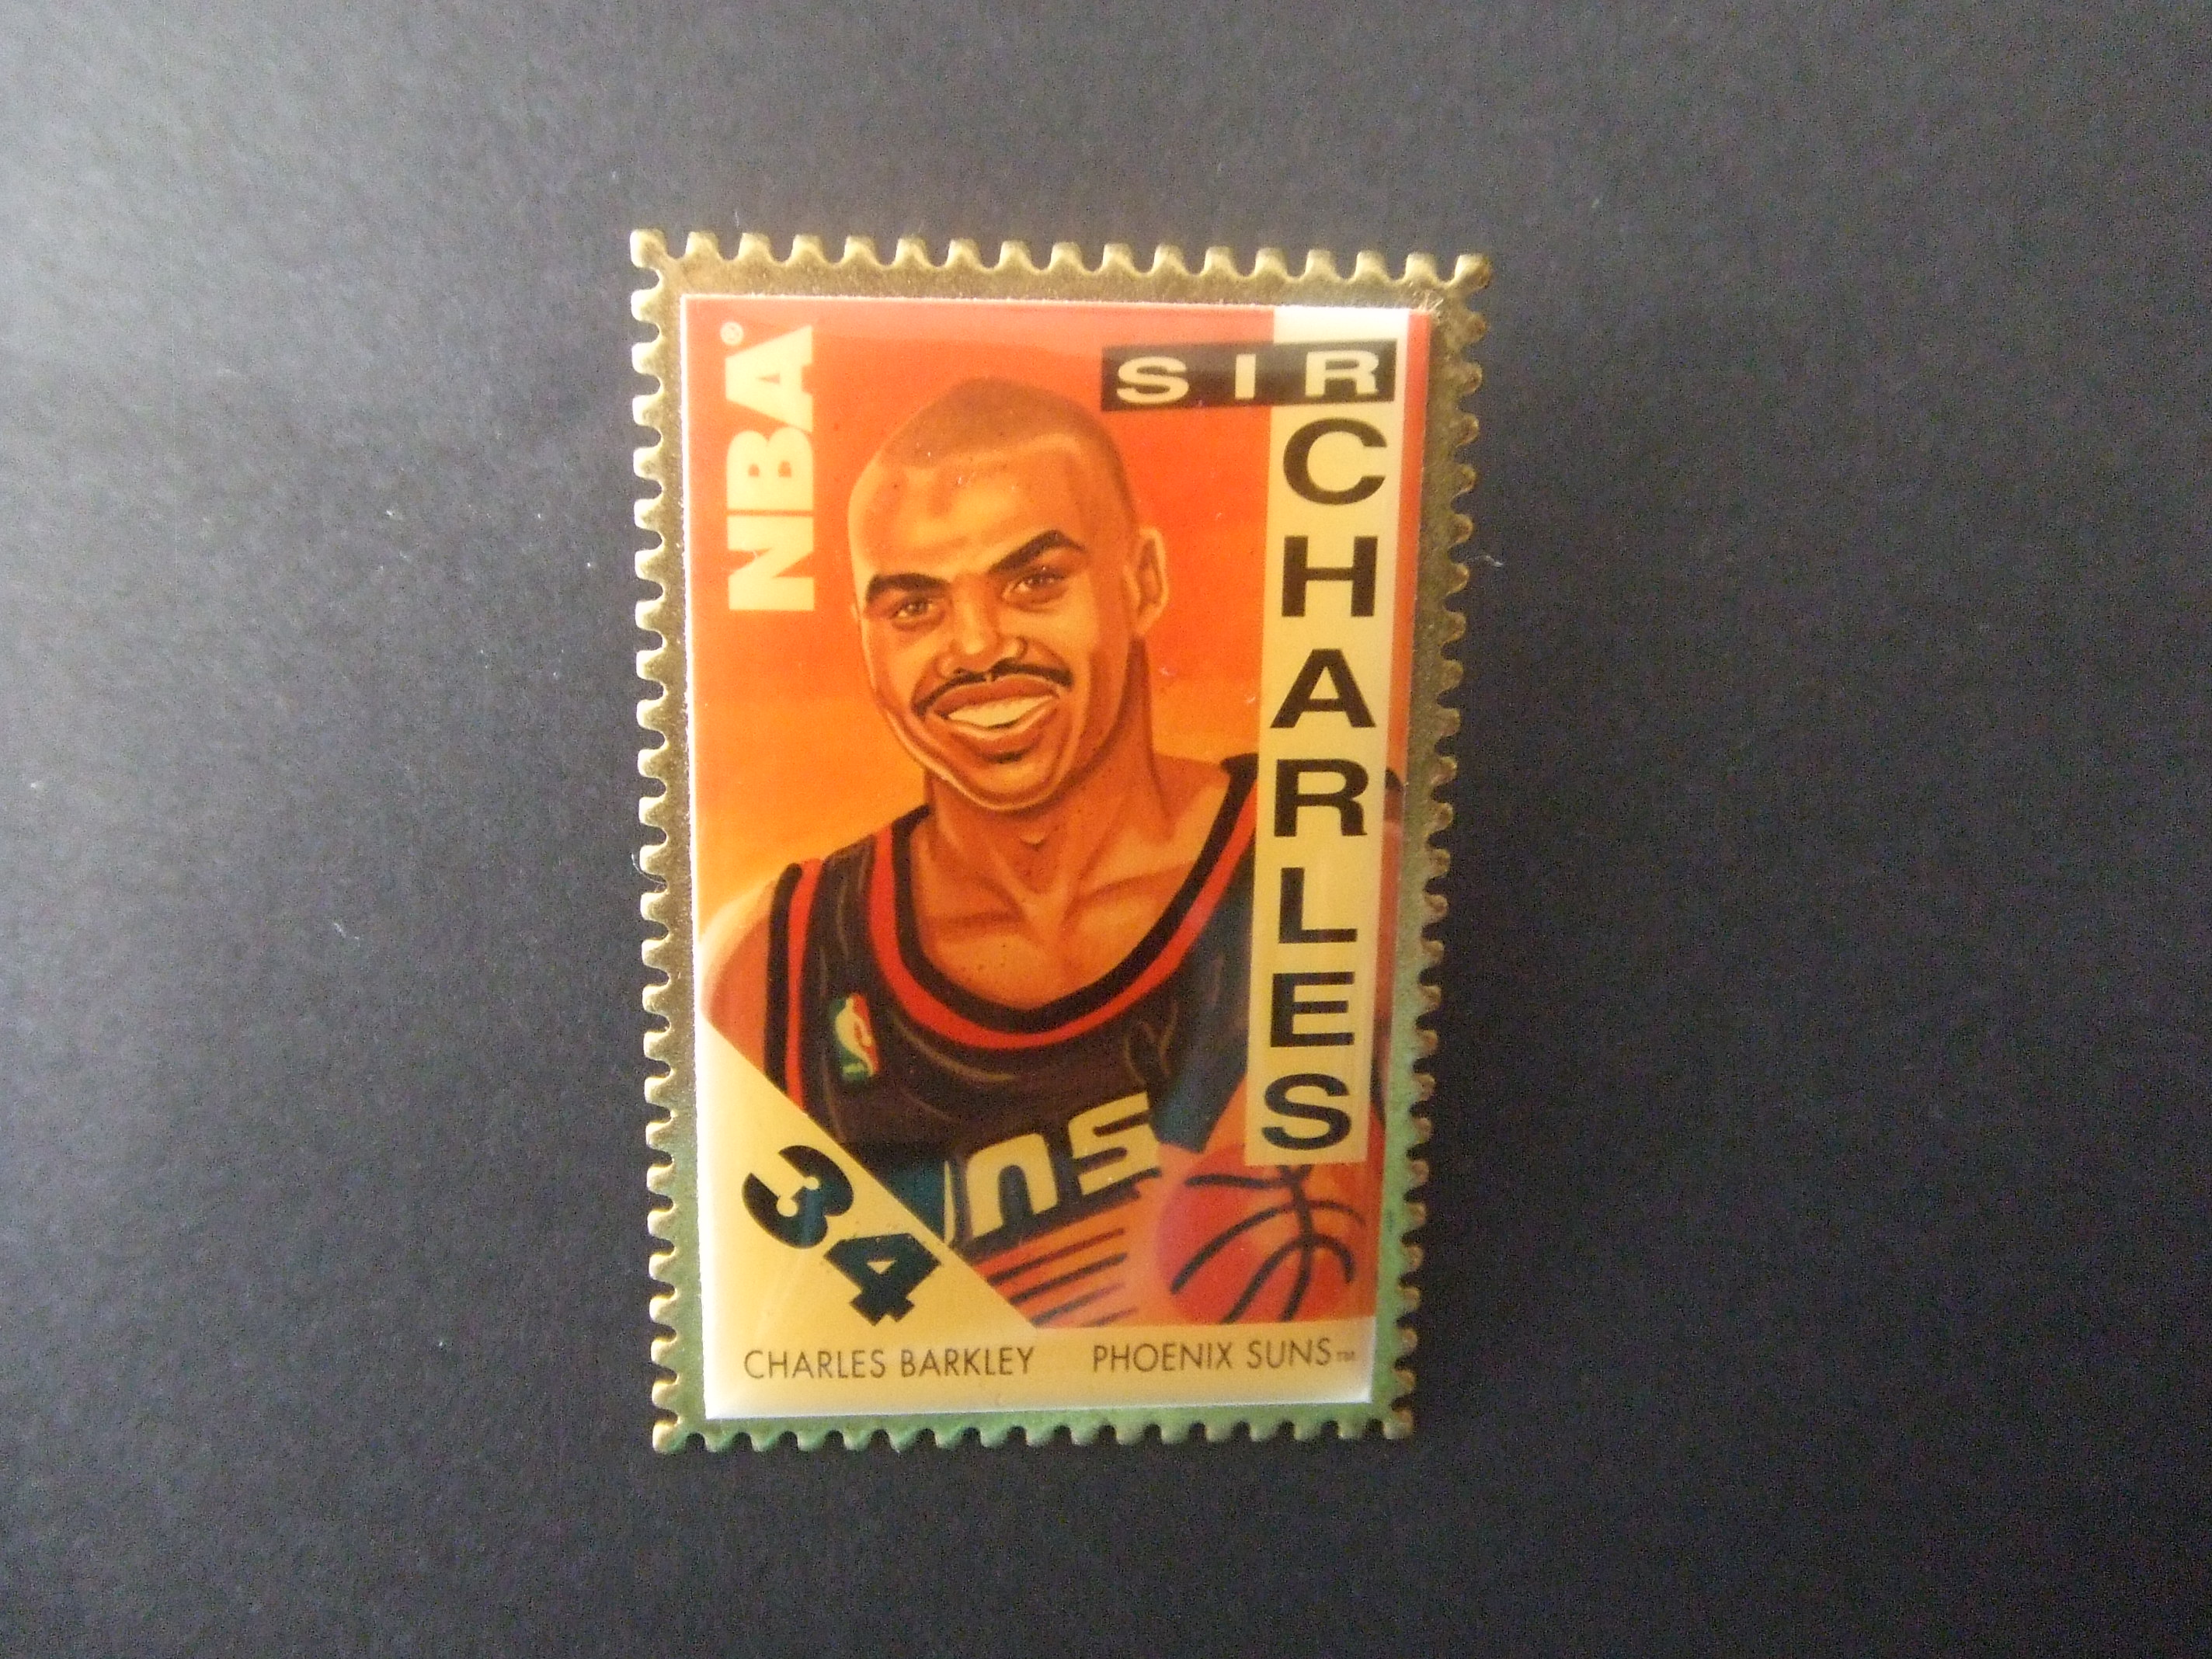 Basketbal Charles Barkley NBA speler Phoenix Suns postzegel